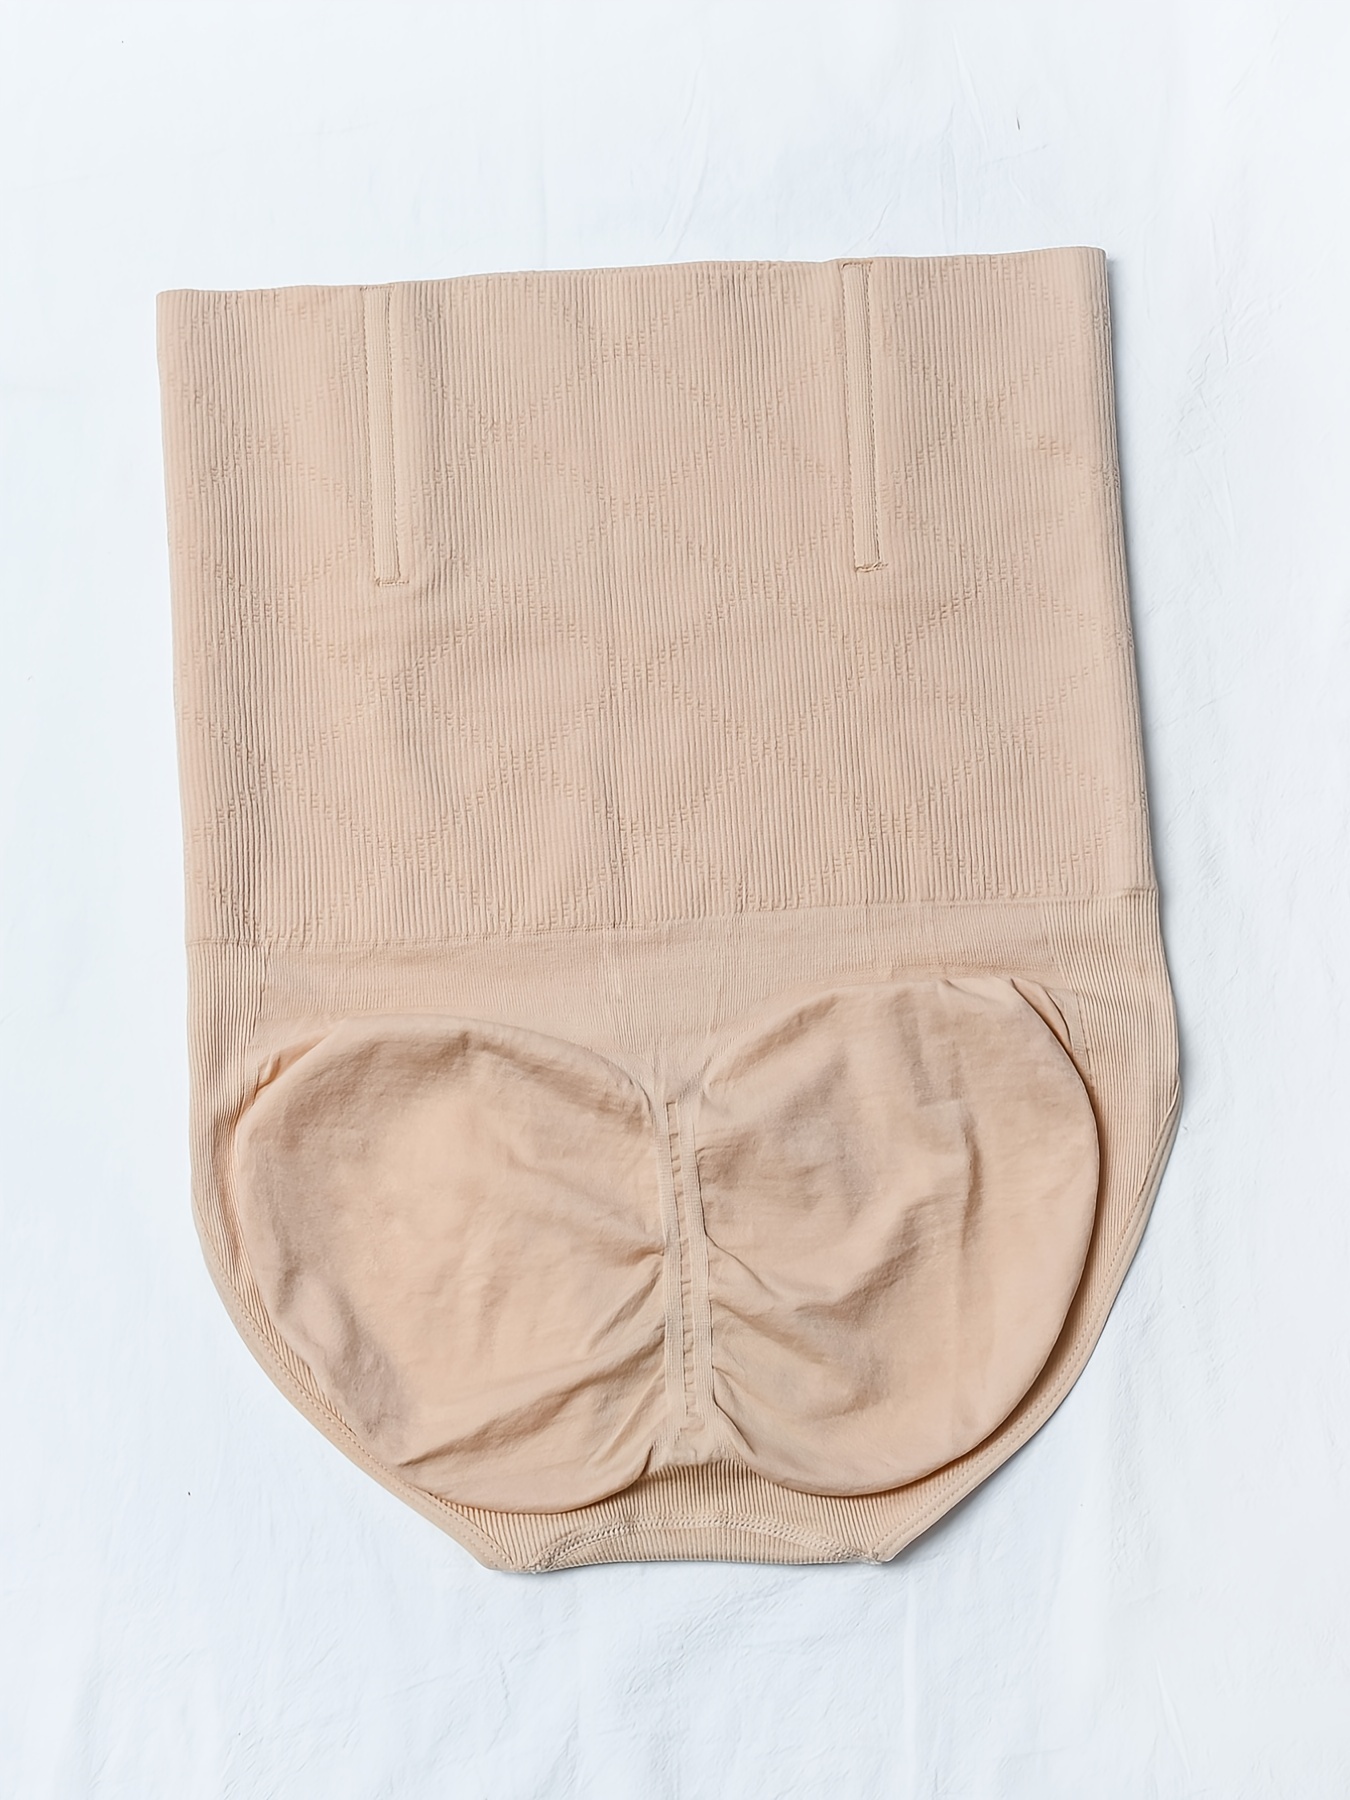 Seamless Knickers Shaper High Waist Slimming Tummy Control Pantie Briefs  Body Lady Corset Underwear,BEIGE,M 